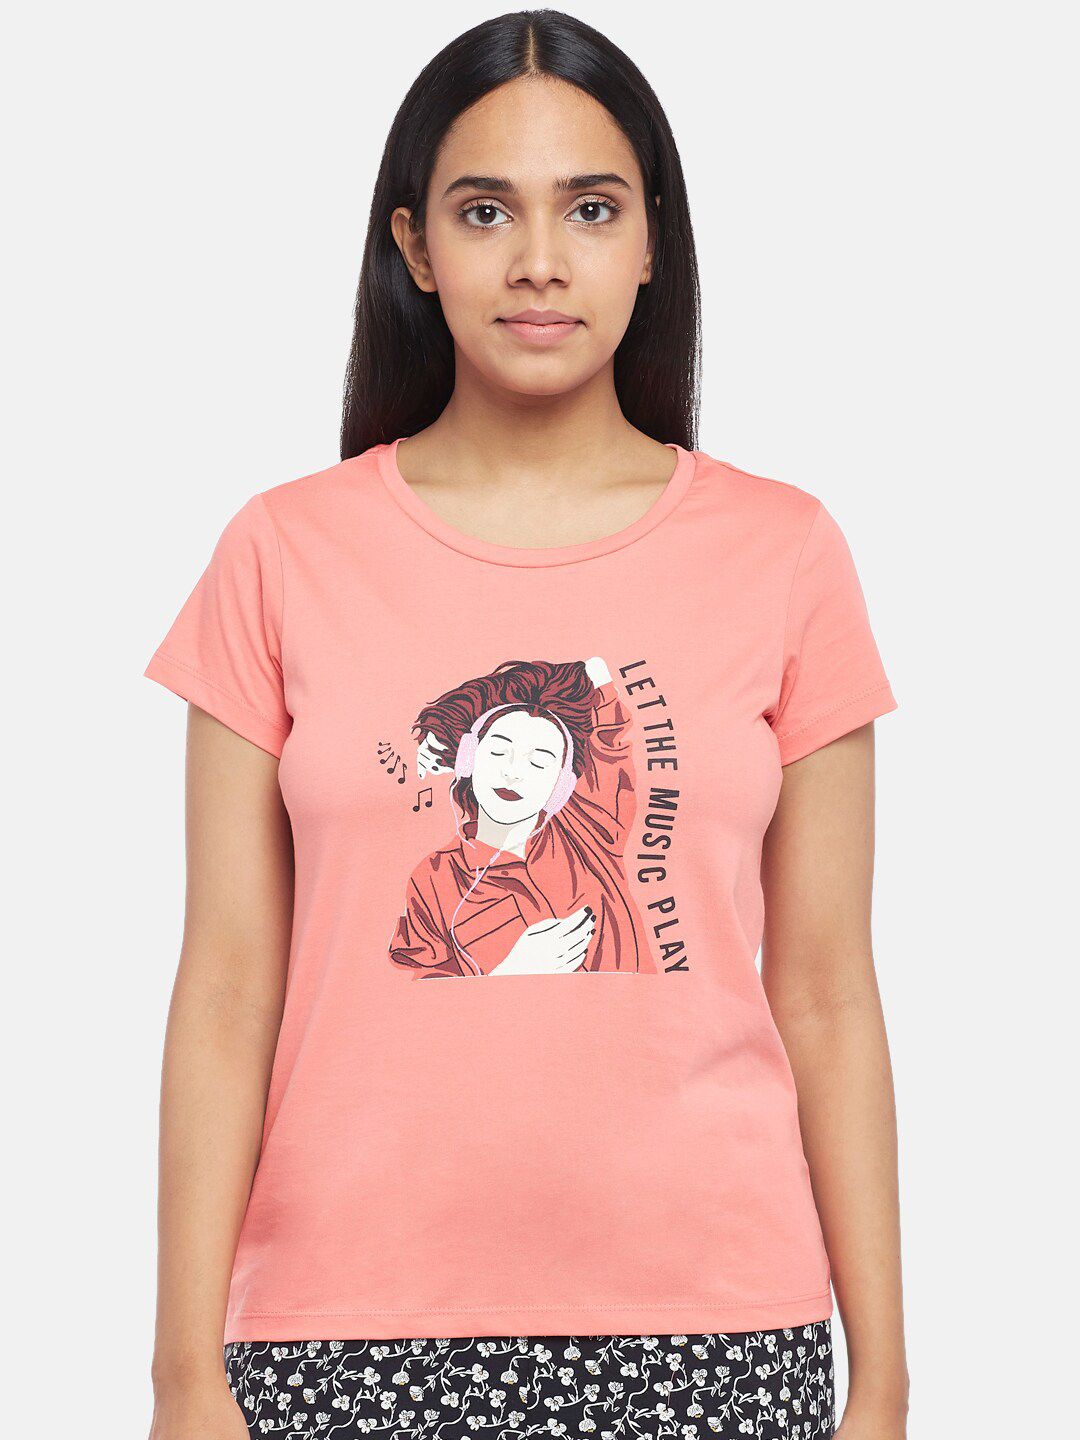 Dreamz by Pantaloons Women Pink Printed Tshirt Price in India